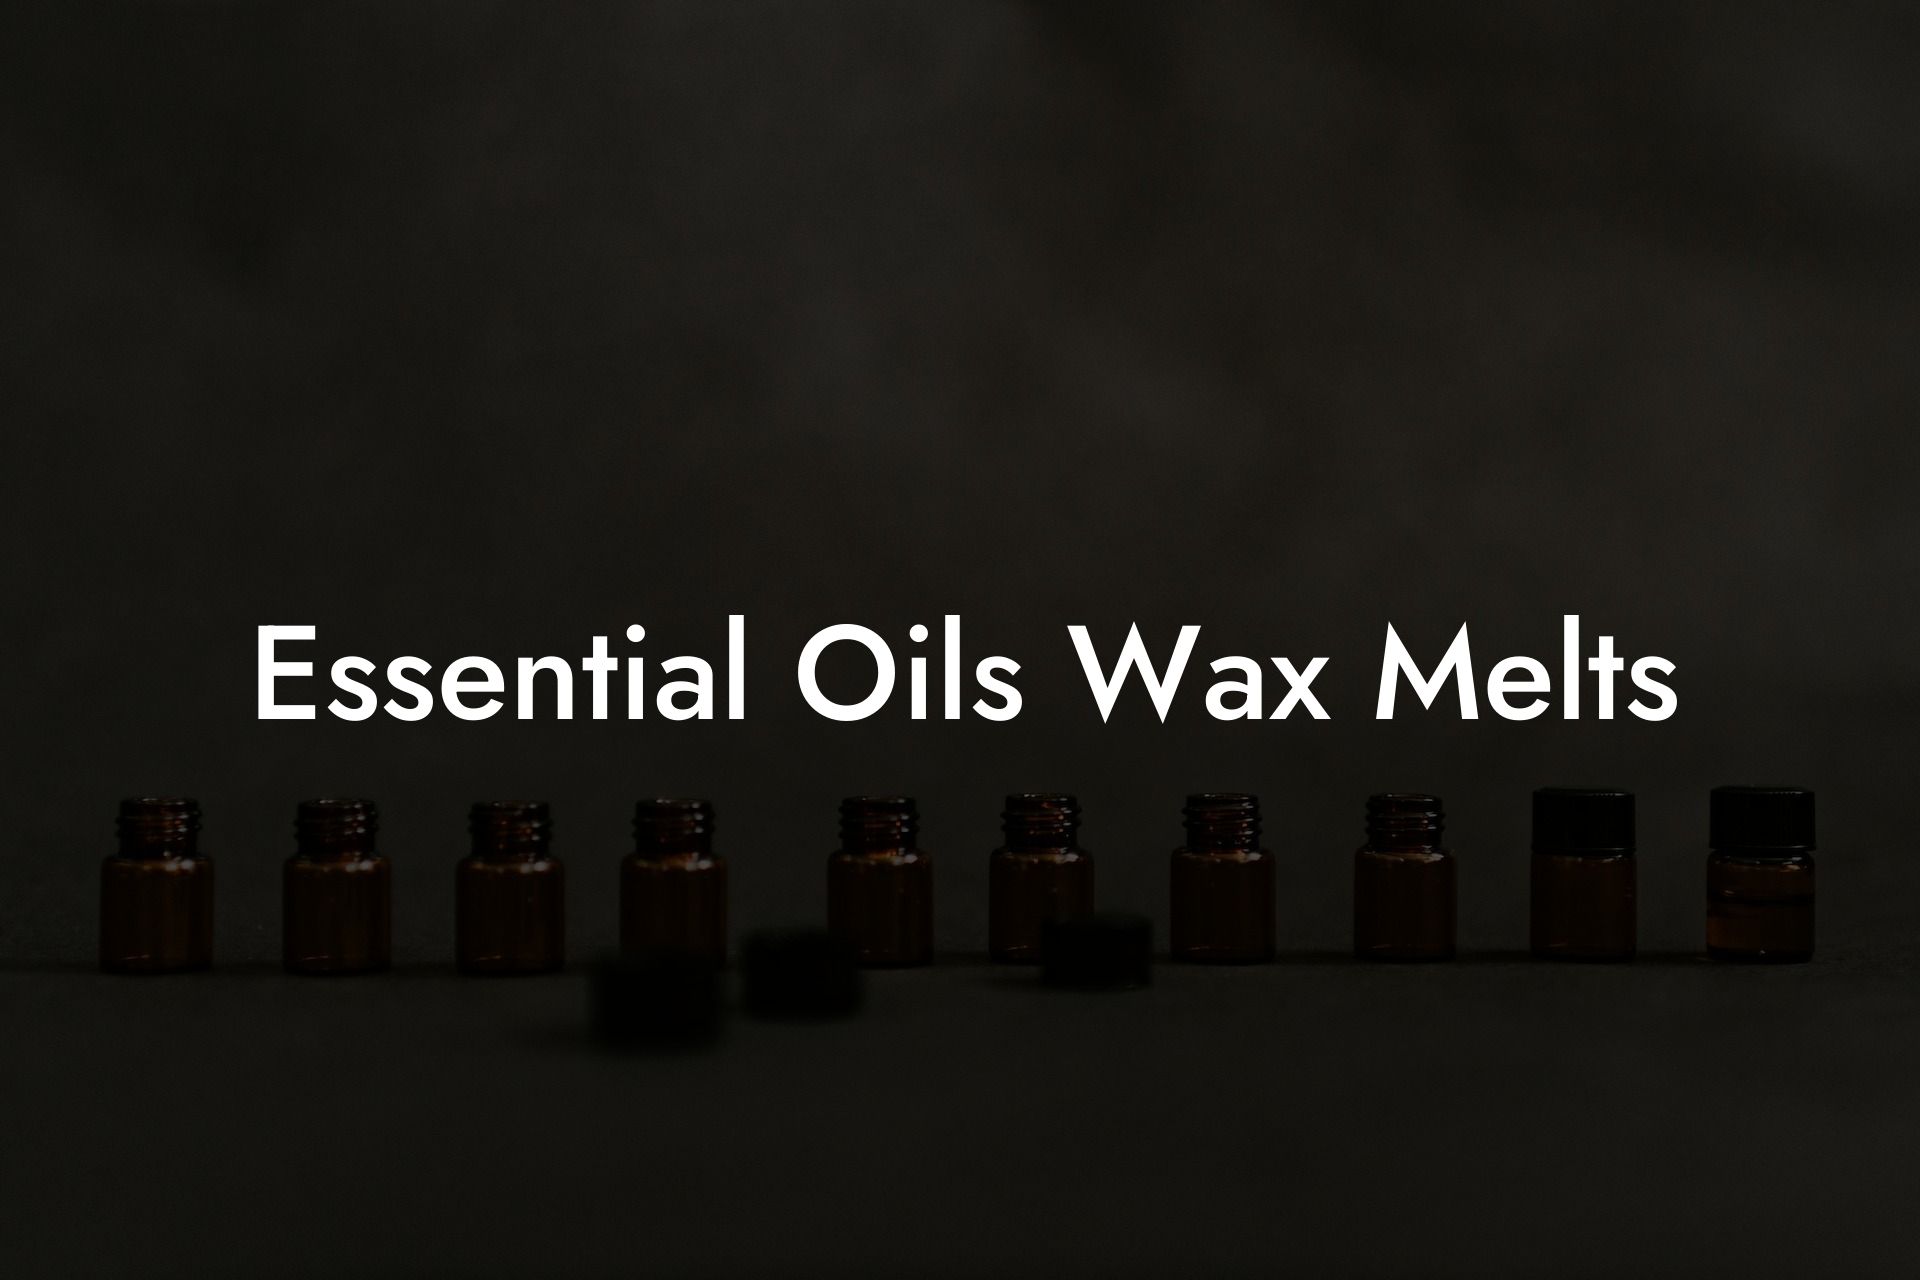 Essential Oils Wax Melts